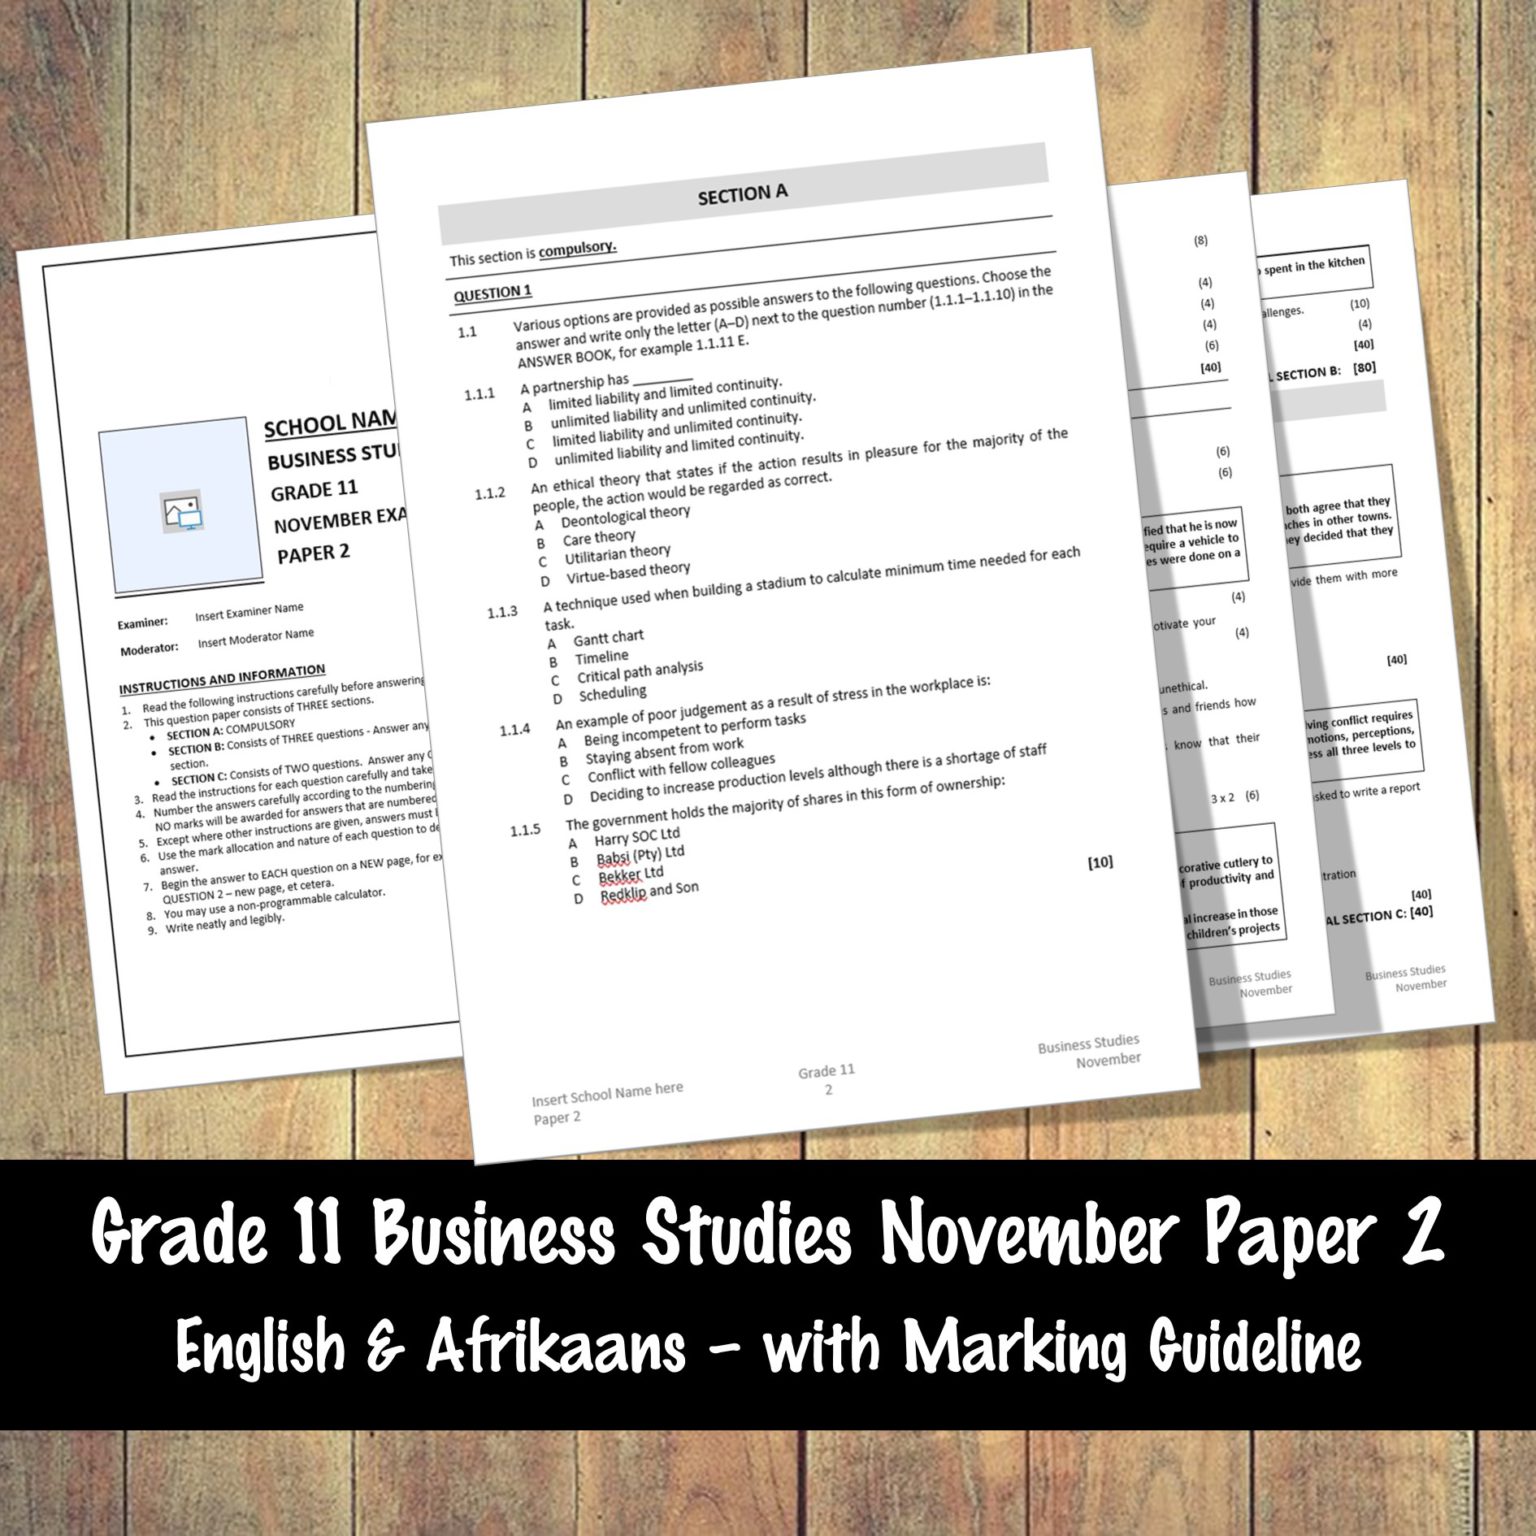 business studies grade 11 stress management essay